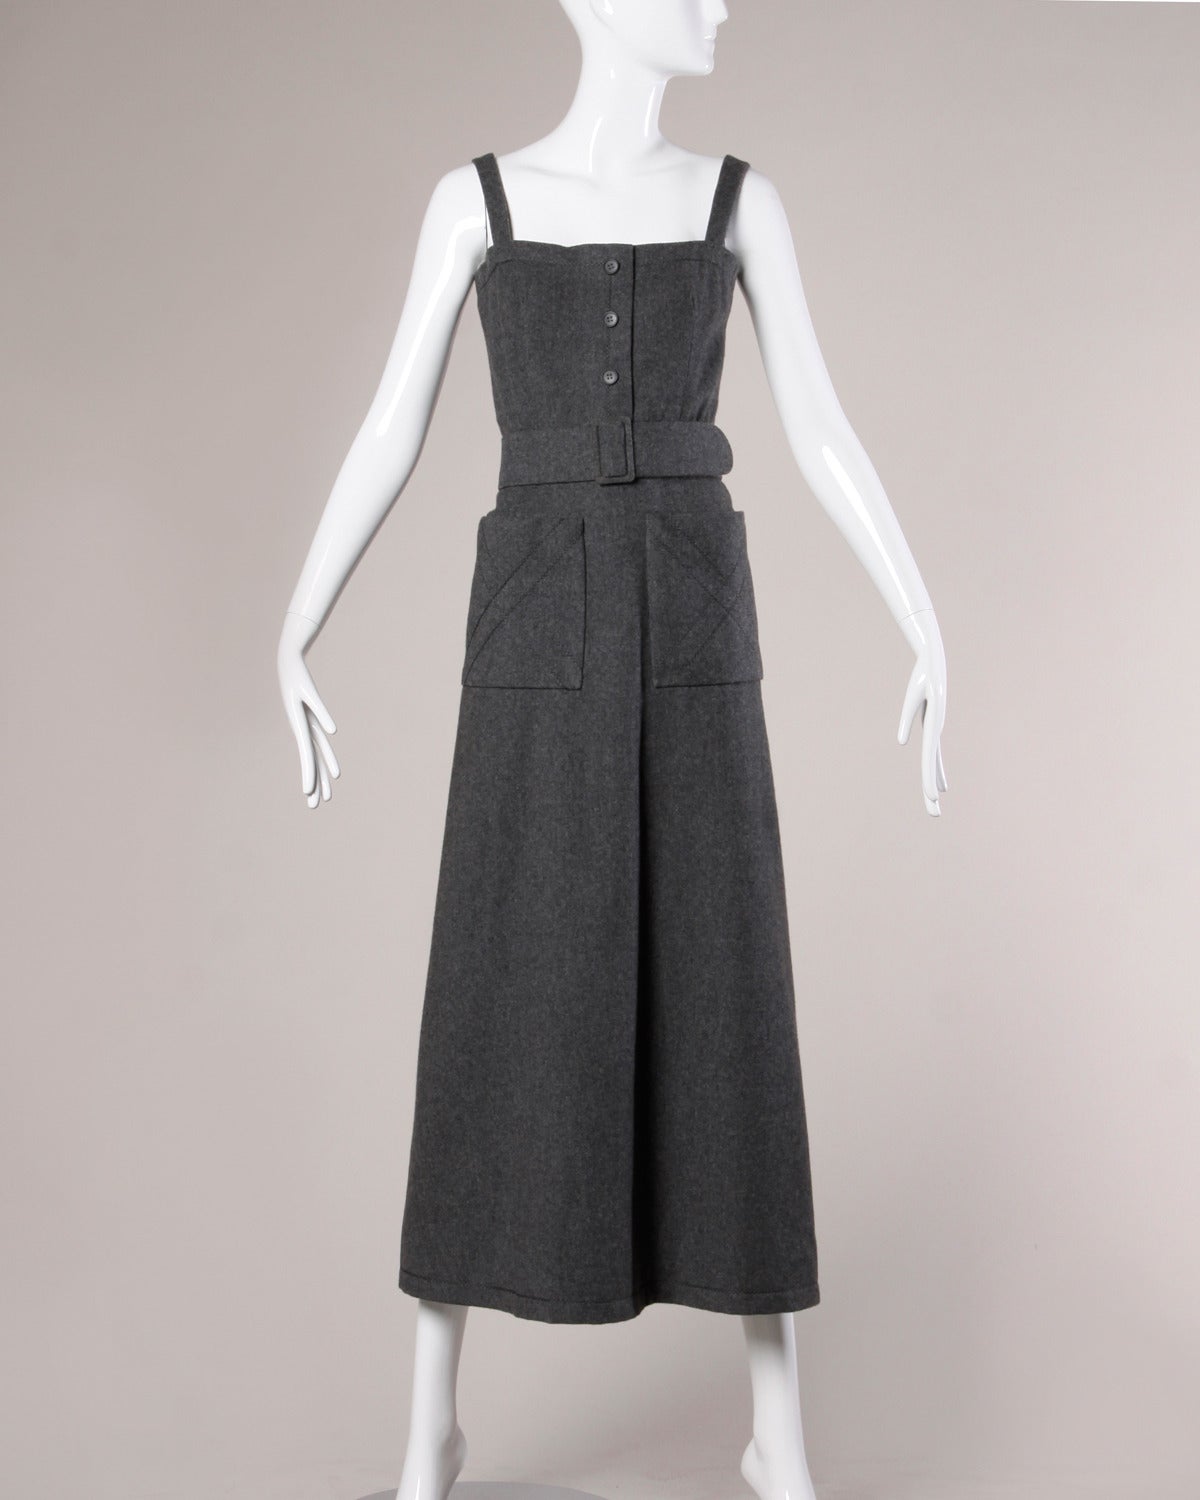 Jean Patou Vintage 1960s Wool 3-Piece Belt, Wrap & Dress Ensemble In Excellent Condition For Sale In Sparks, NV